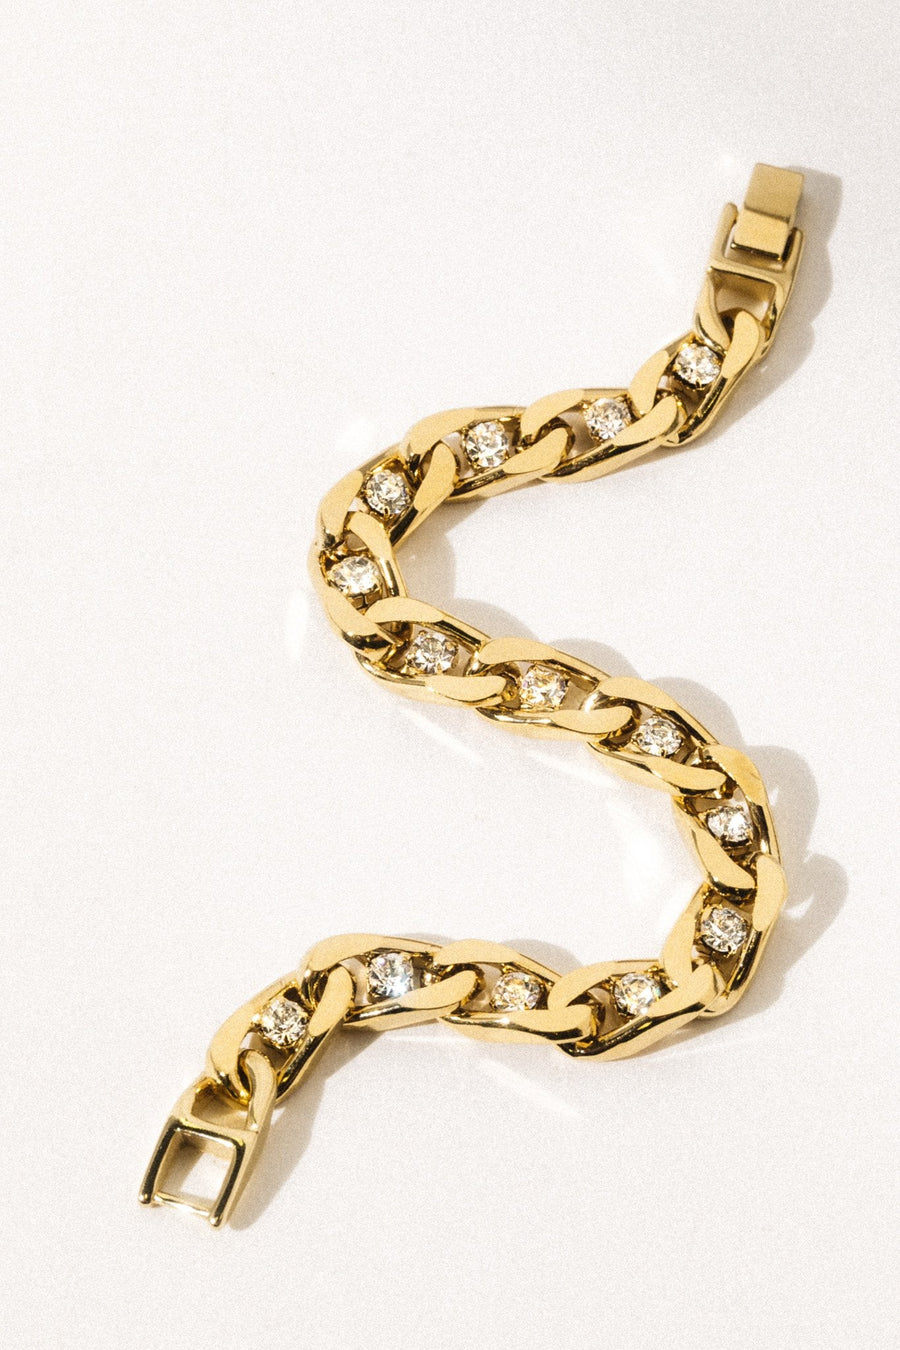 Goddess Jewelry Palm Springs Bracelet